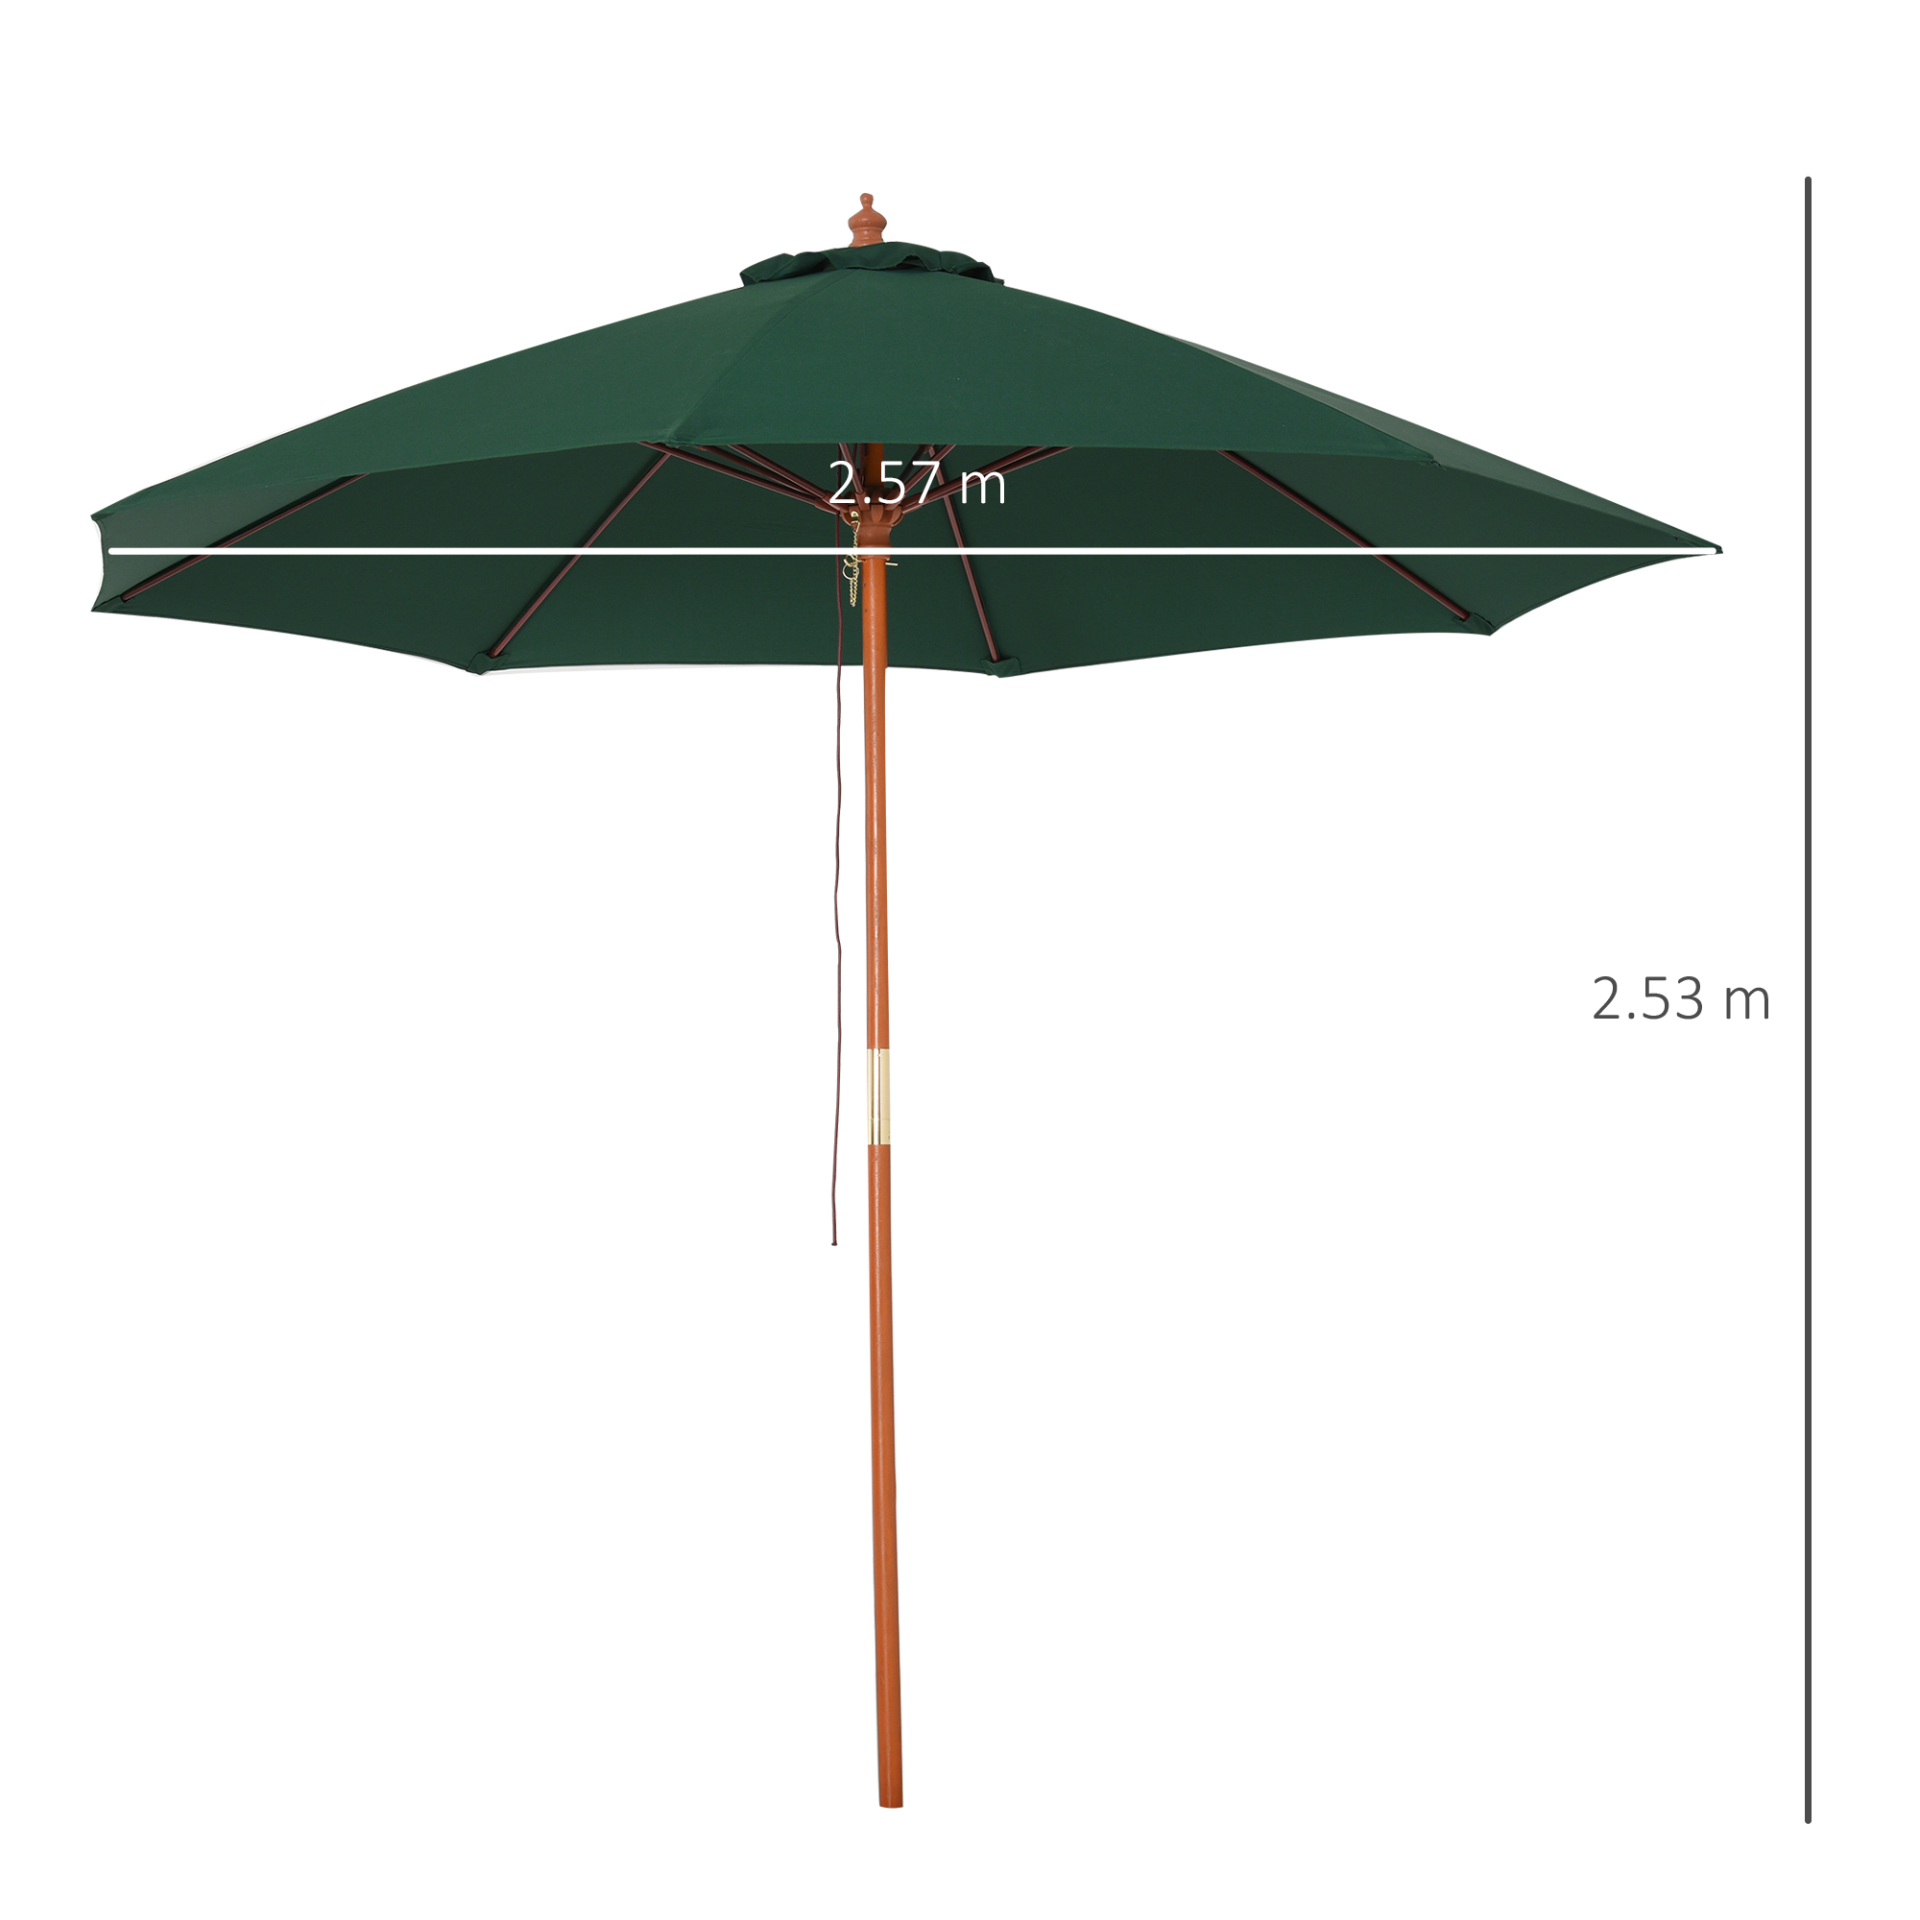 Outsunny 2.5m Wood Parasol Garden Sun Shade Patio Outdoor Market Umbrella Canopy with Top Vent, Green